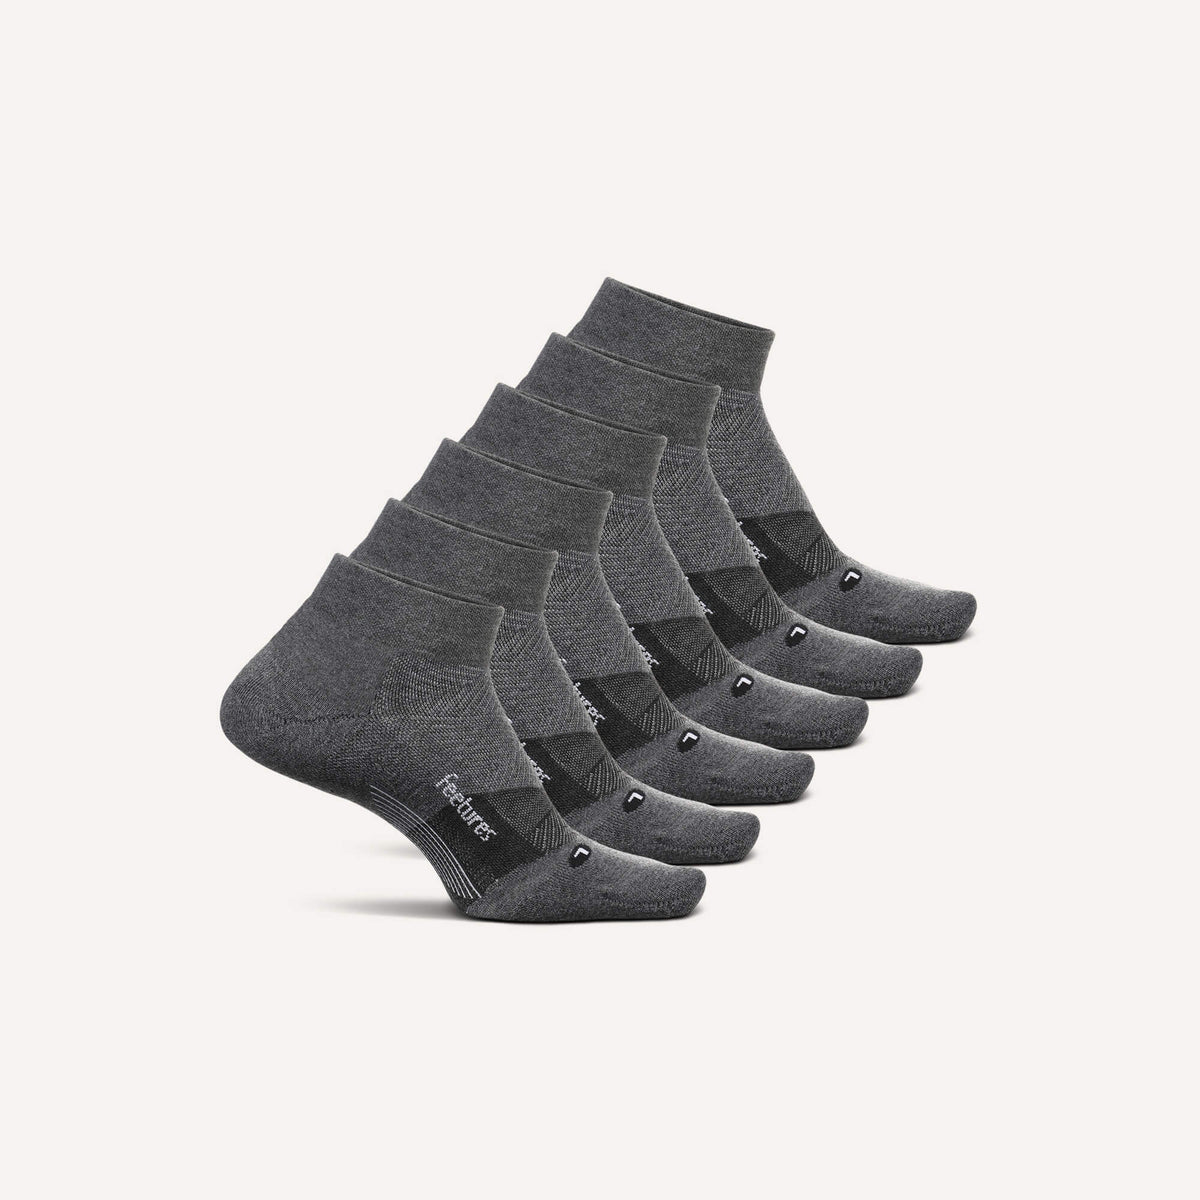 Buy No nonsense Women's Cushioned Mesh Quarter Top Ankle Socks